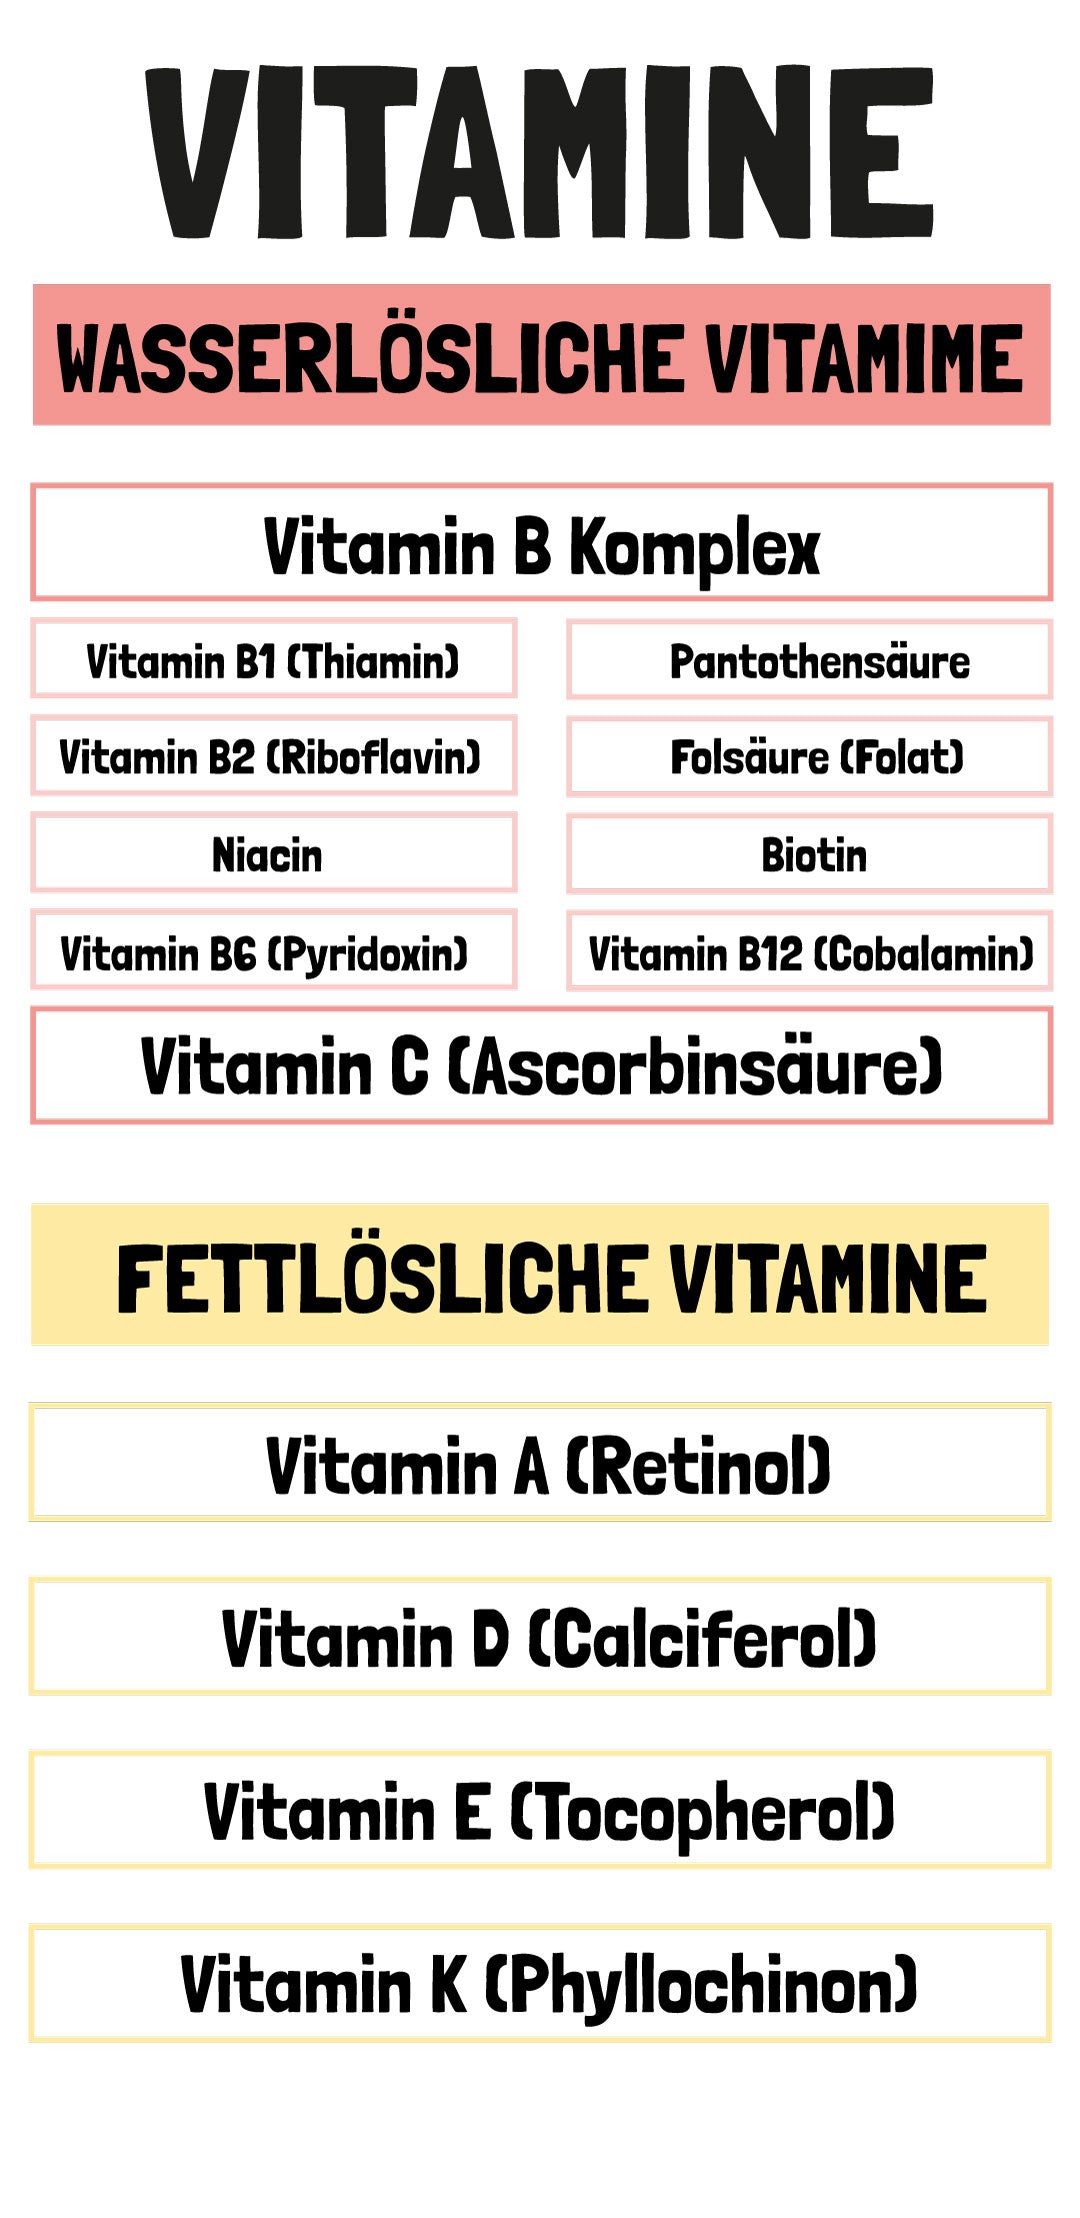 Wasserlösliche vs. fettlösliche Vitamine